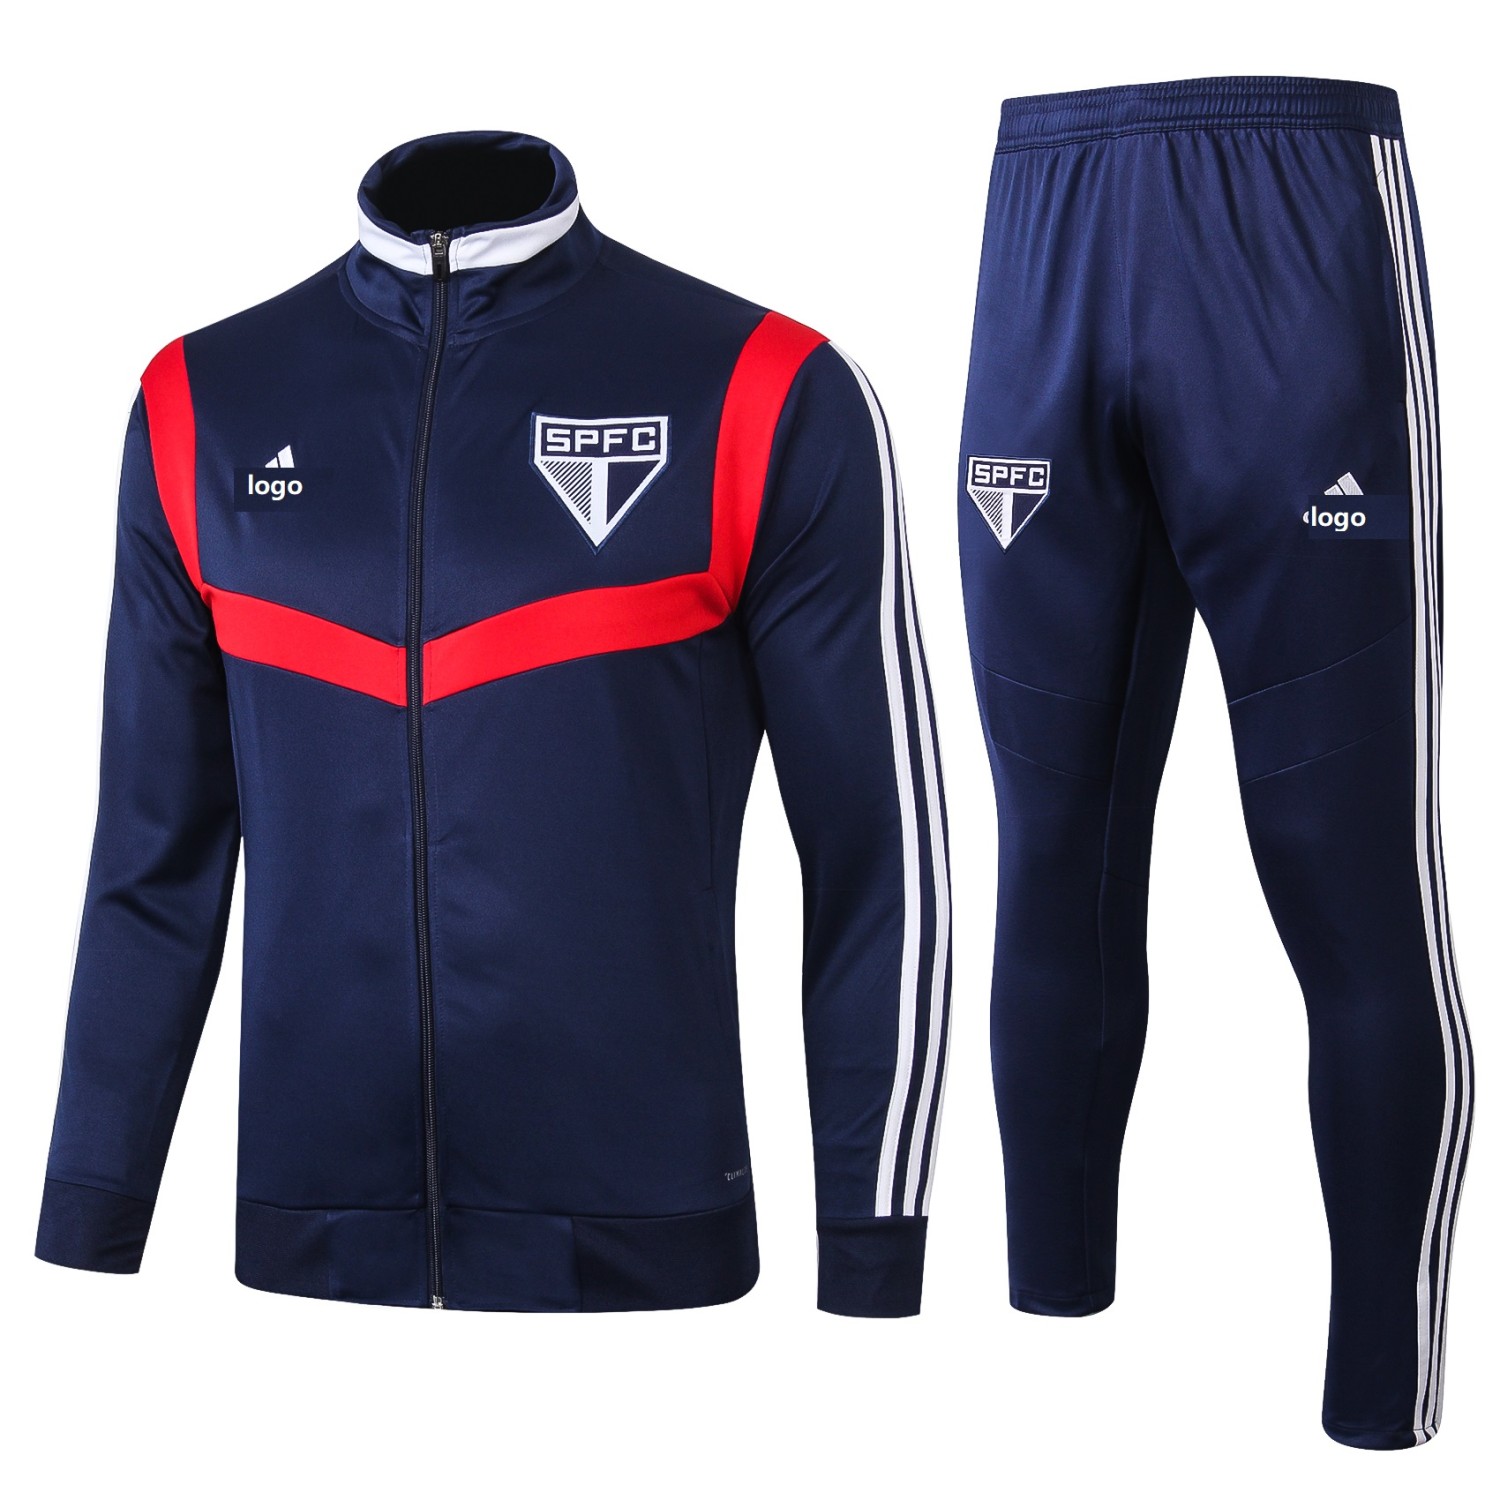 19-20 Adult Sao paulo royal blue jacket soccer uniforms football kits